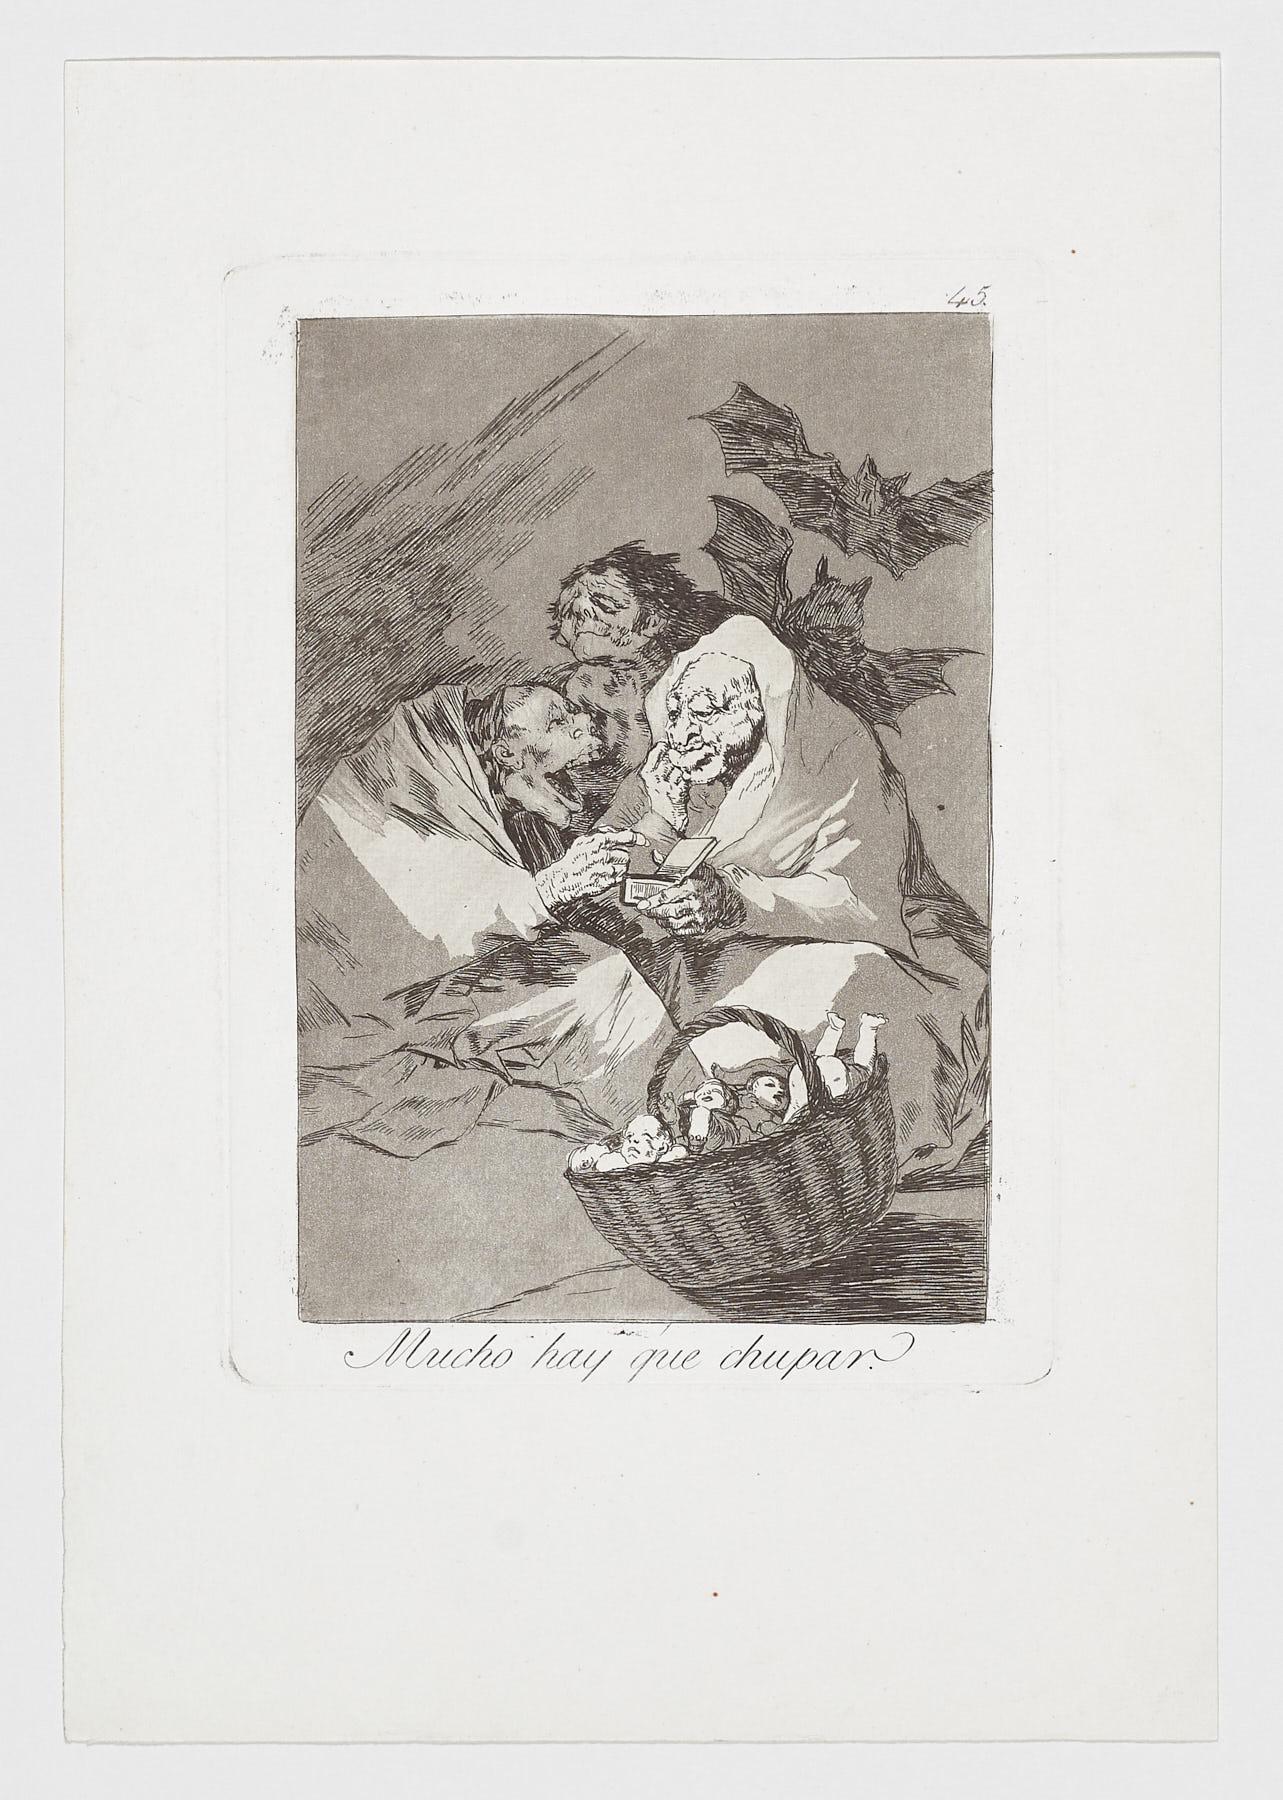 Figurative Print Francisco Goya - Francisco De Goya Caprichos Mucho hay que chupar 2nd edition original art print 